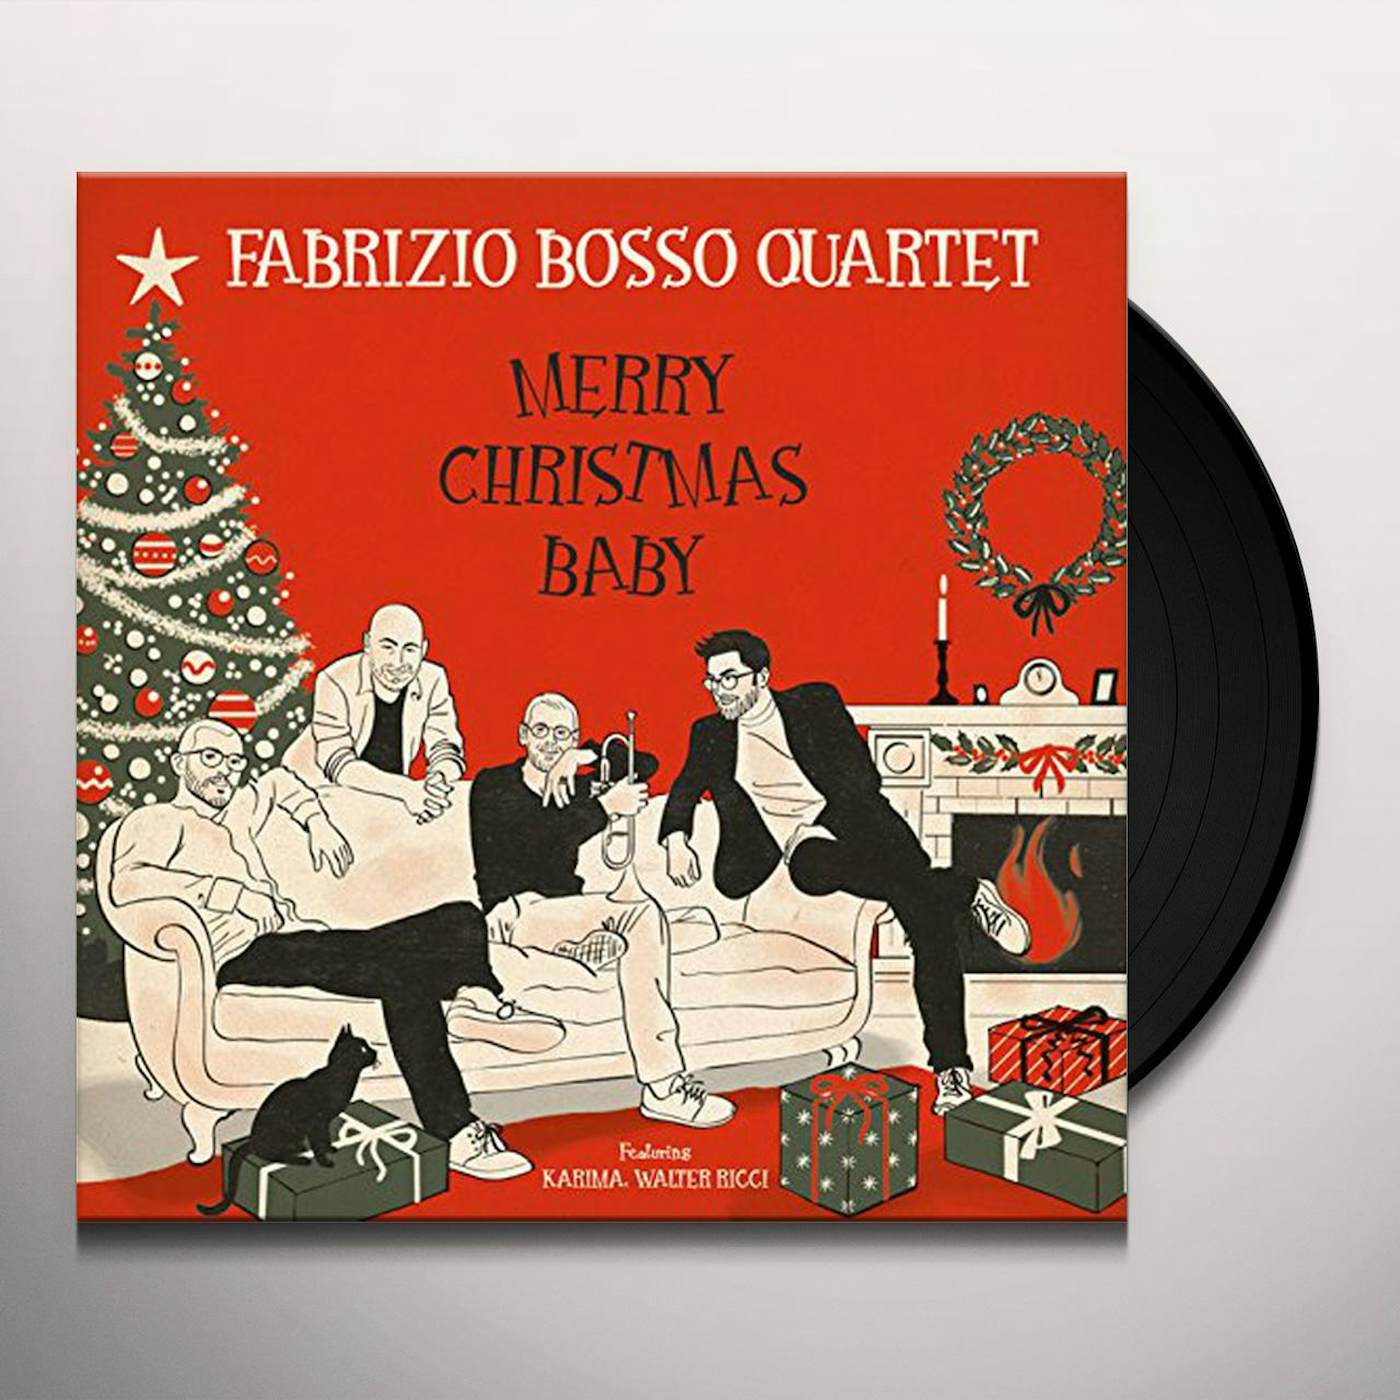 Fabrizio Bosso Quartet Merry Christmas Baby Vinyl Record